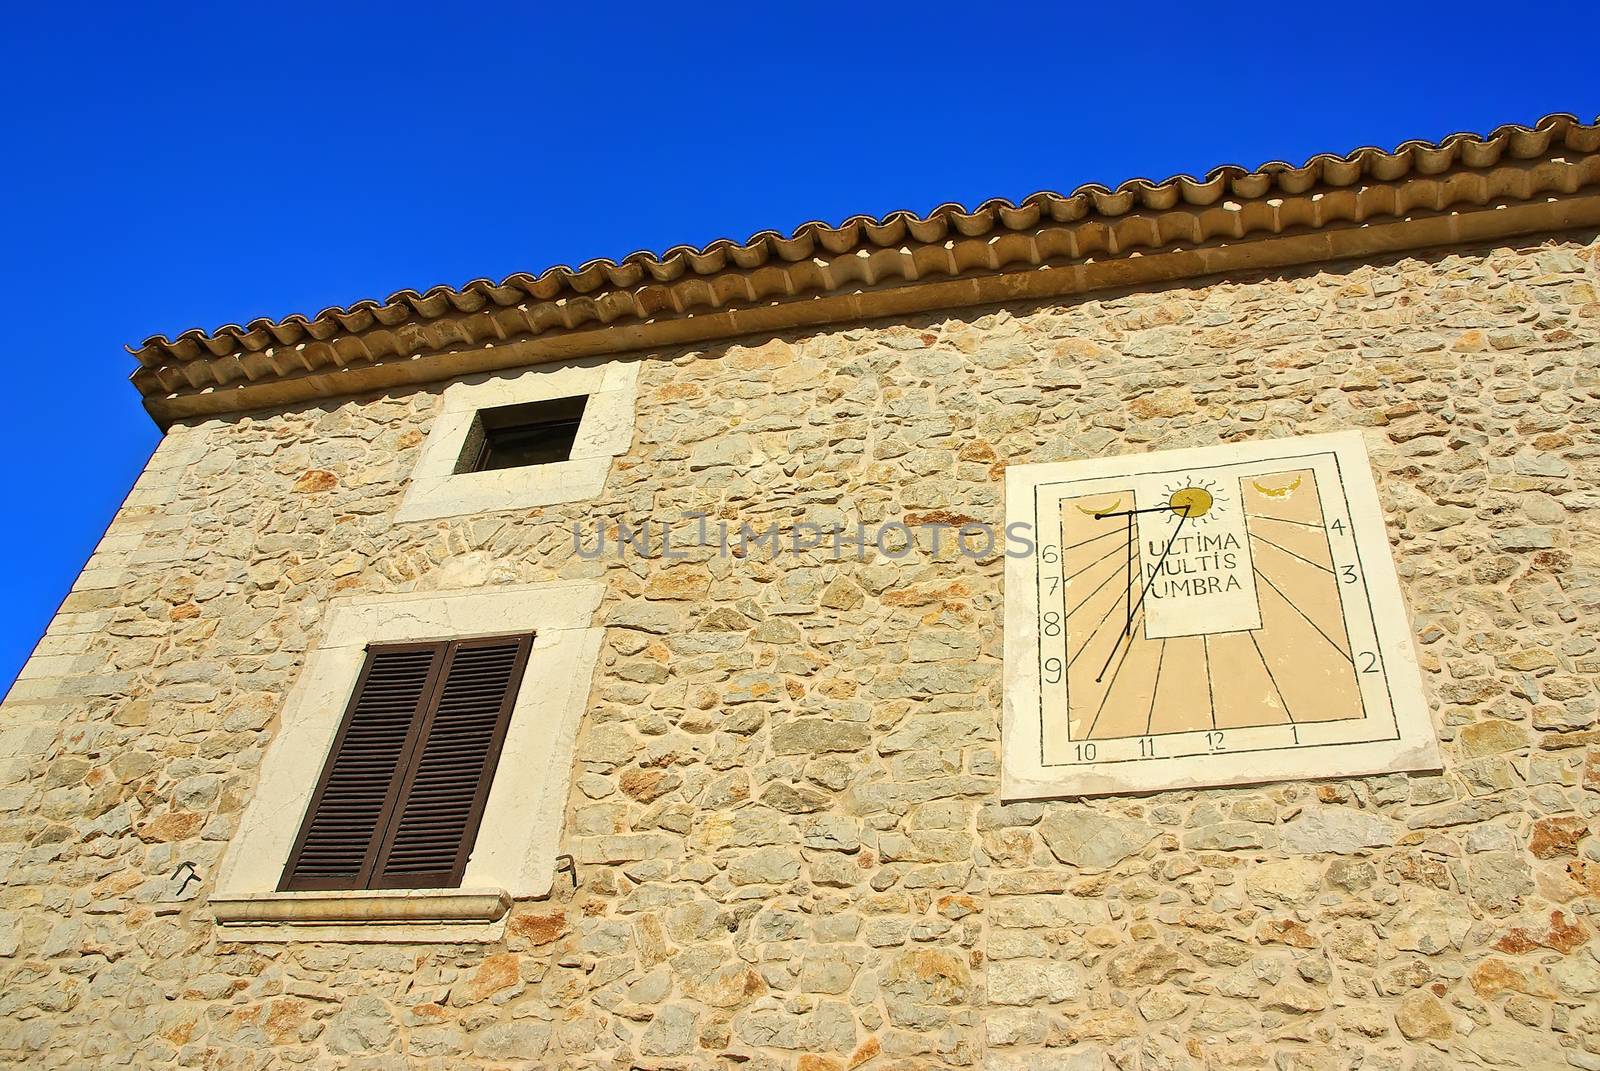 Mediterranean rural House in Majorca (Spain) with a solar clock on the facade